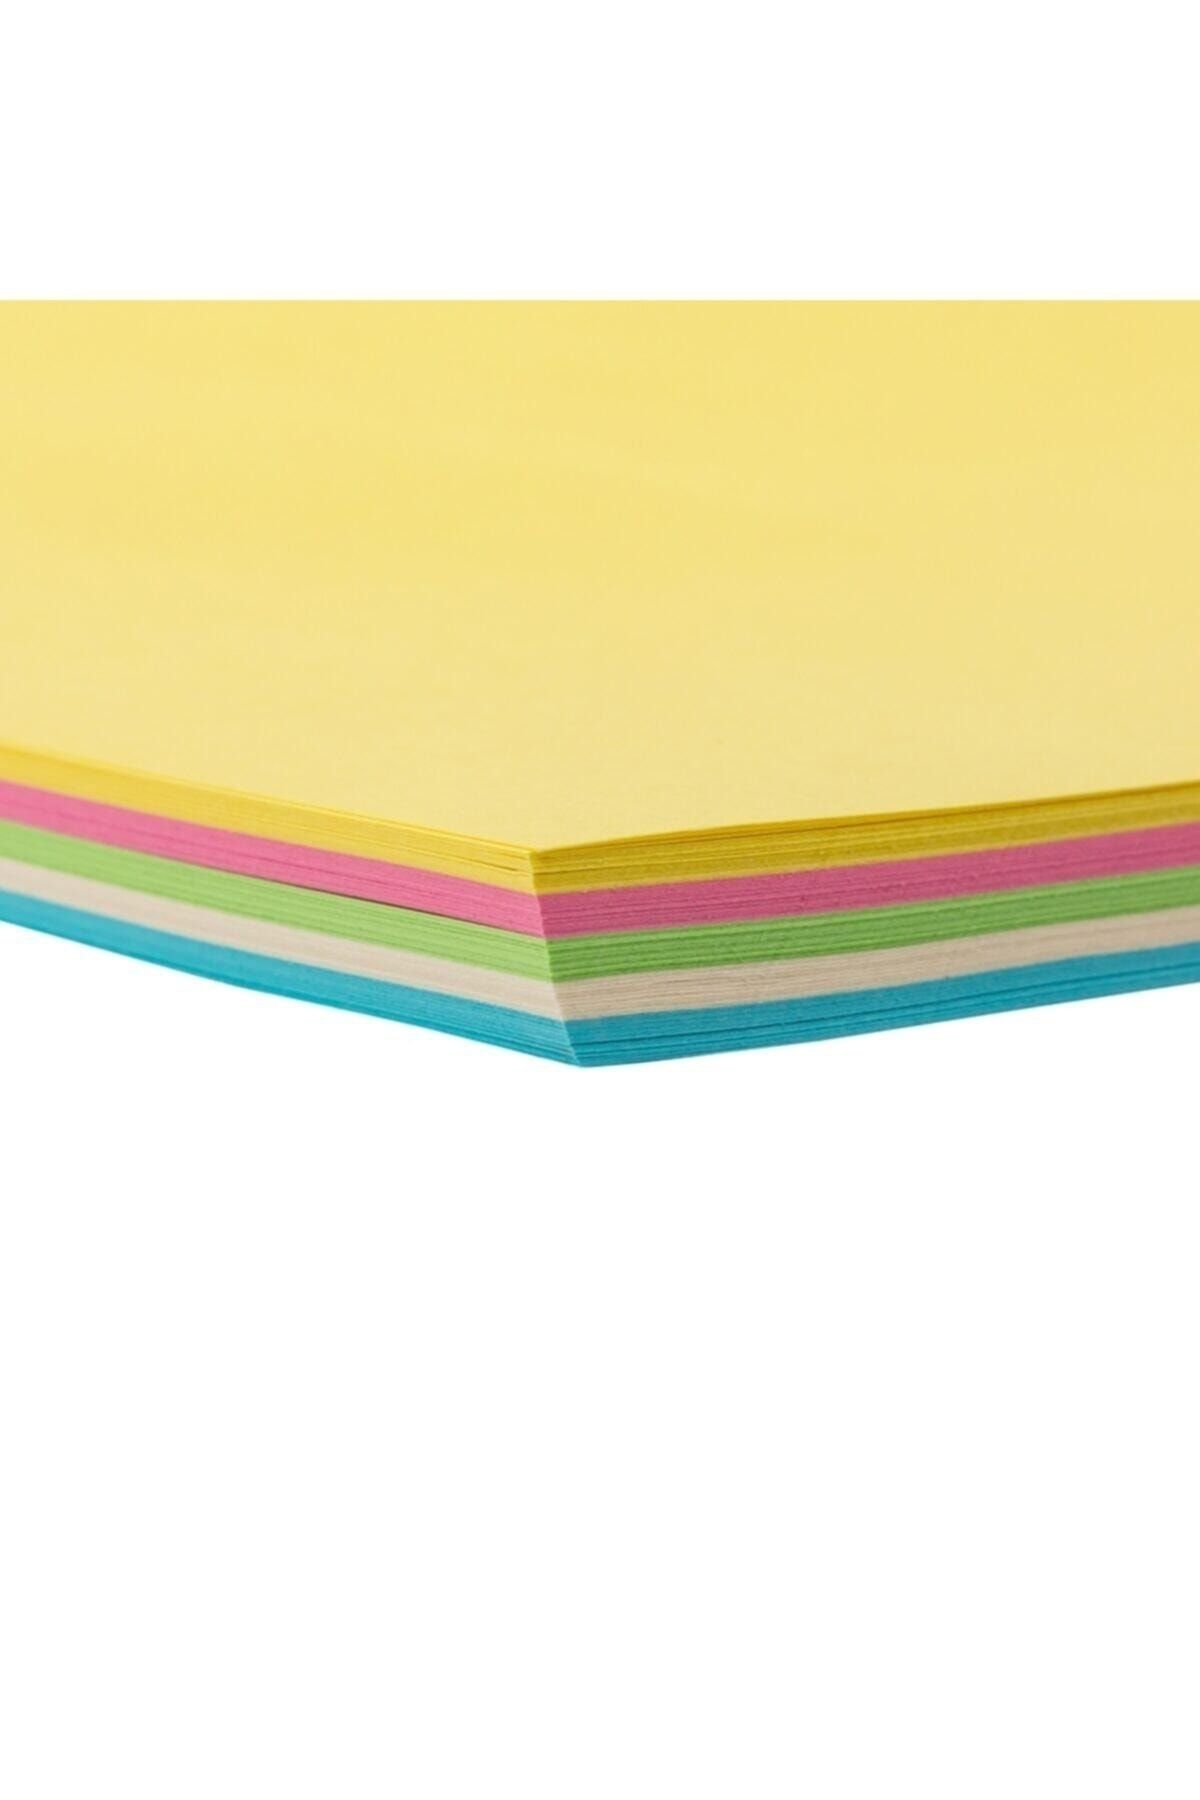 Bigpoint A4 Renkli Fotokopi Kağıdı 5 Pastel Renk 100'lü Paket